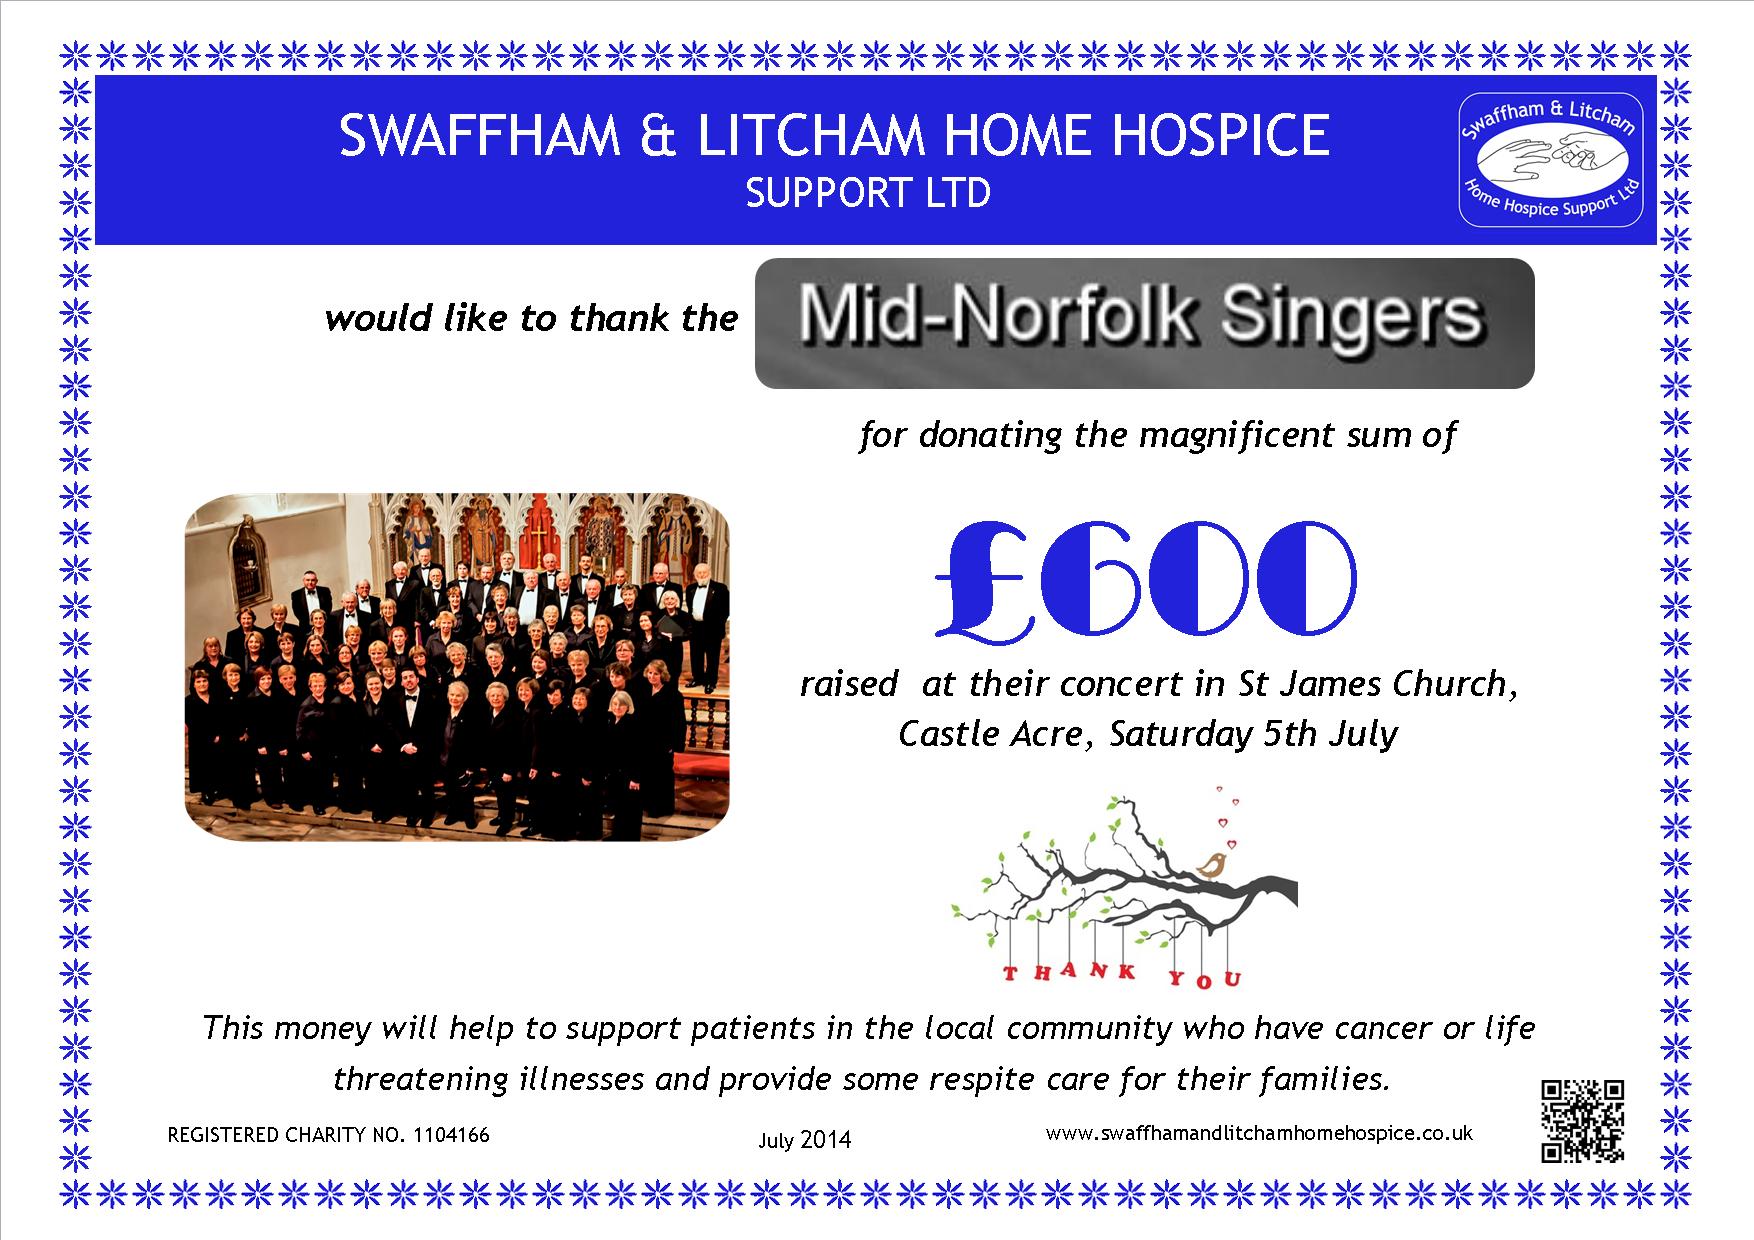 Mid-Norfolk Singers'Concert